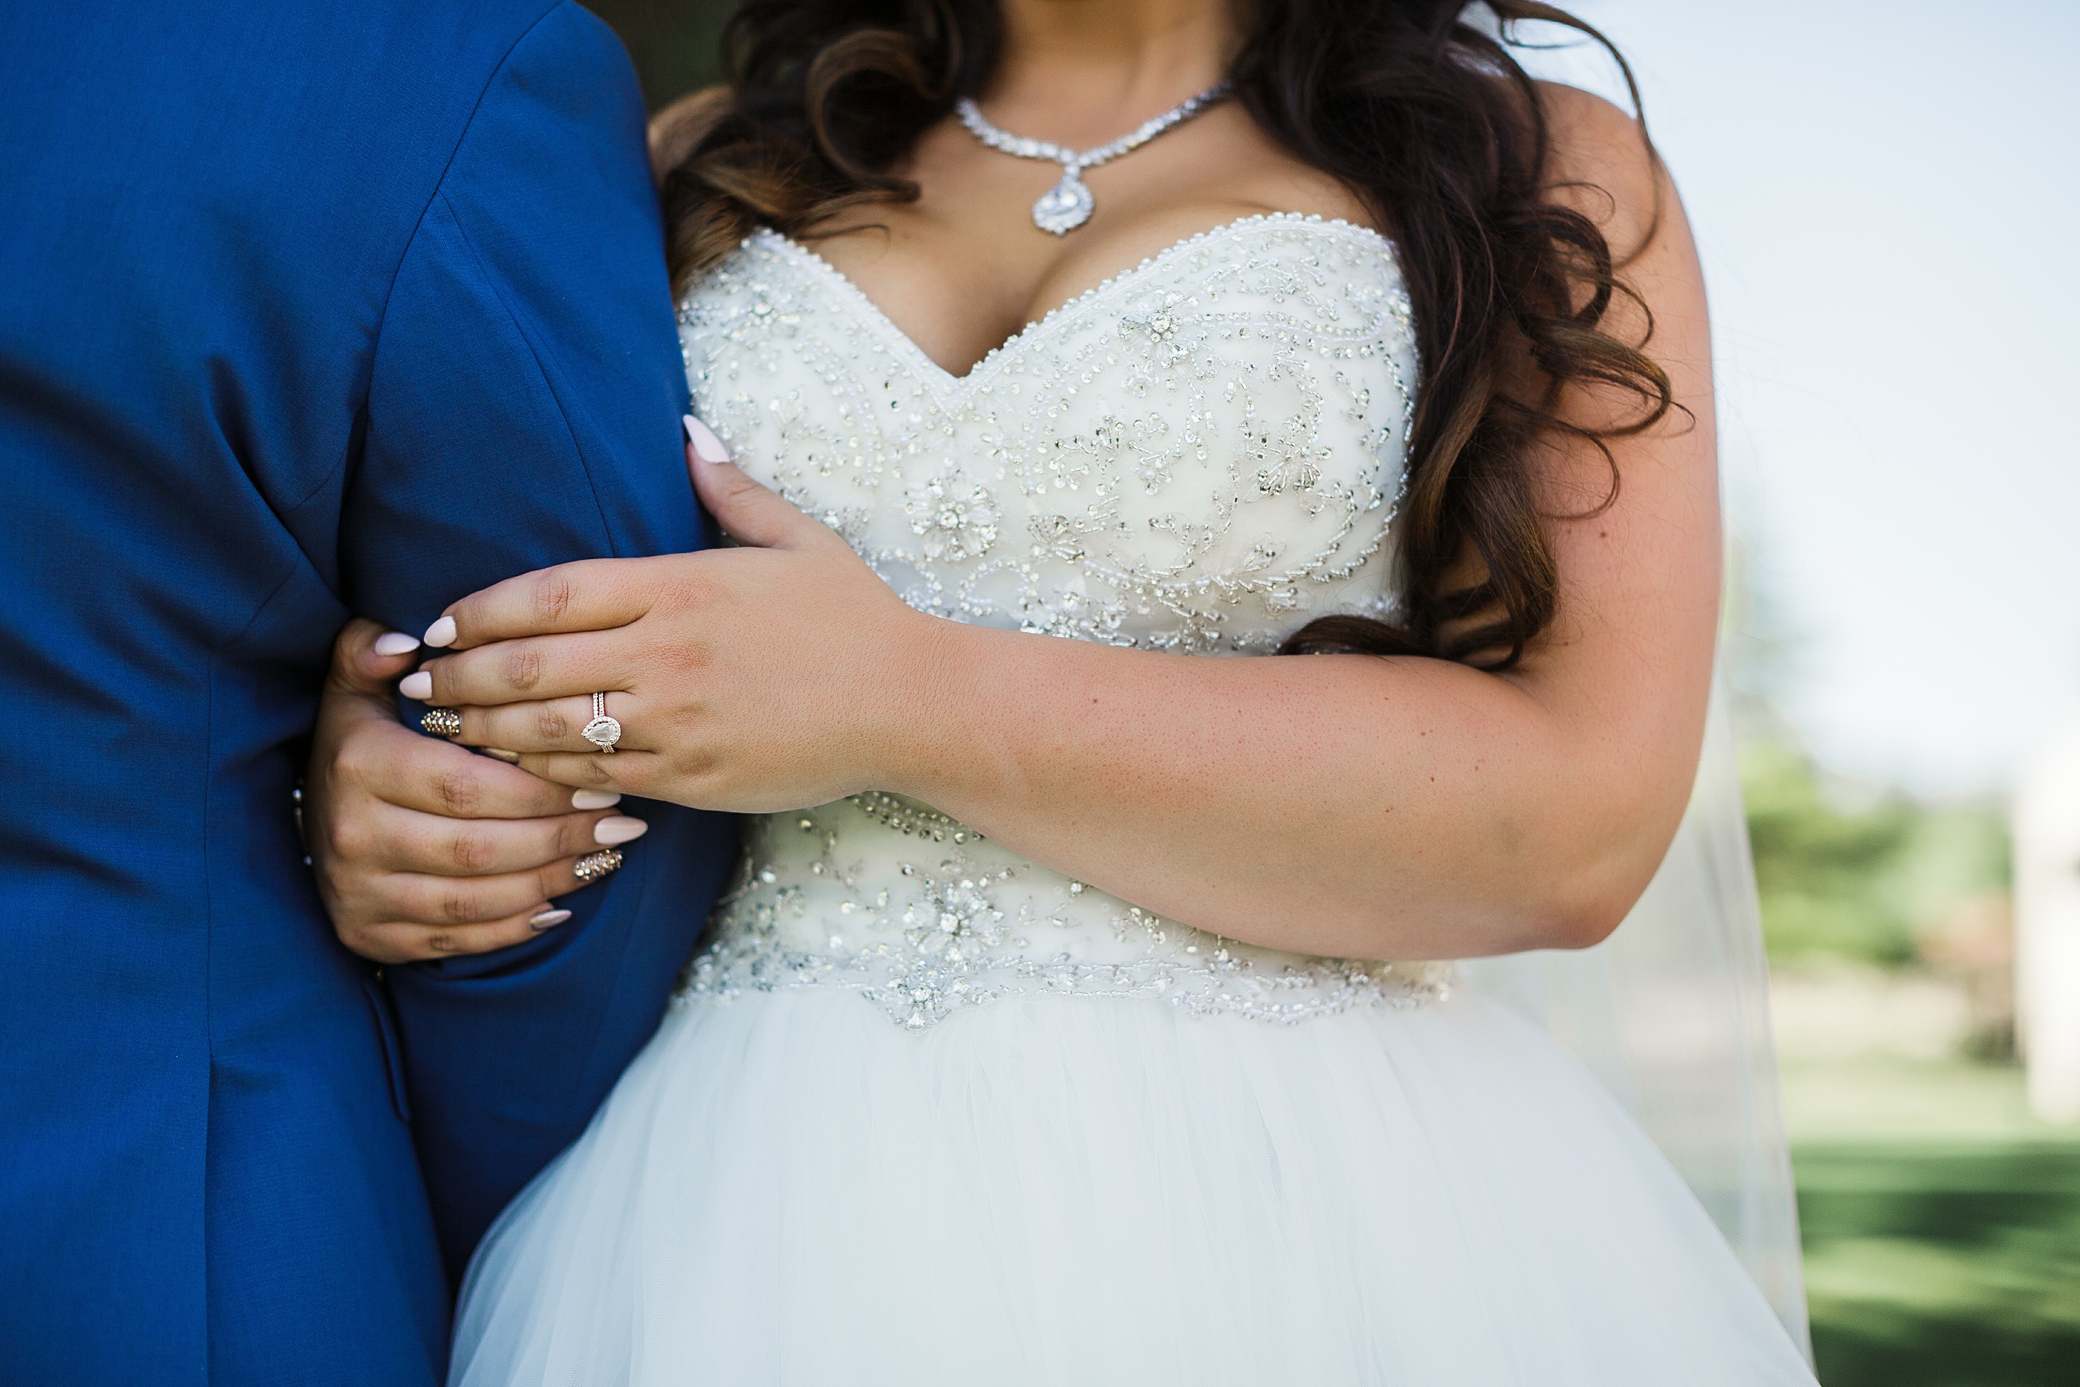 Tear drop wedding ring details on wedding day | Megan Montalvo Photography